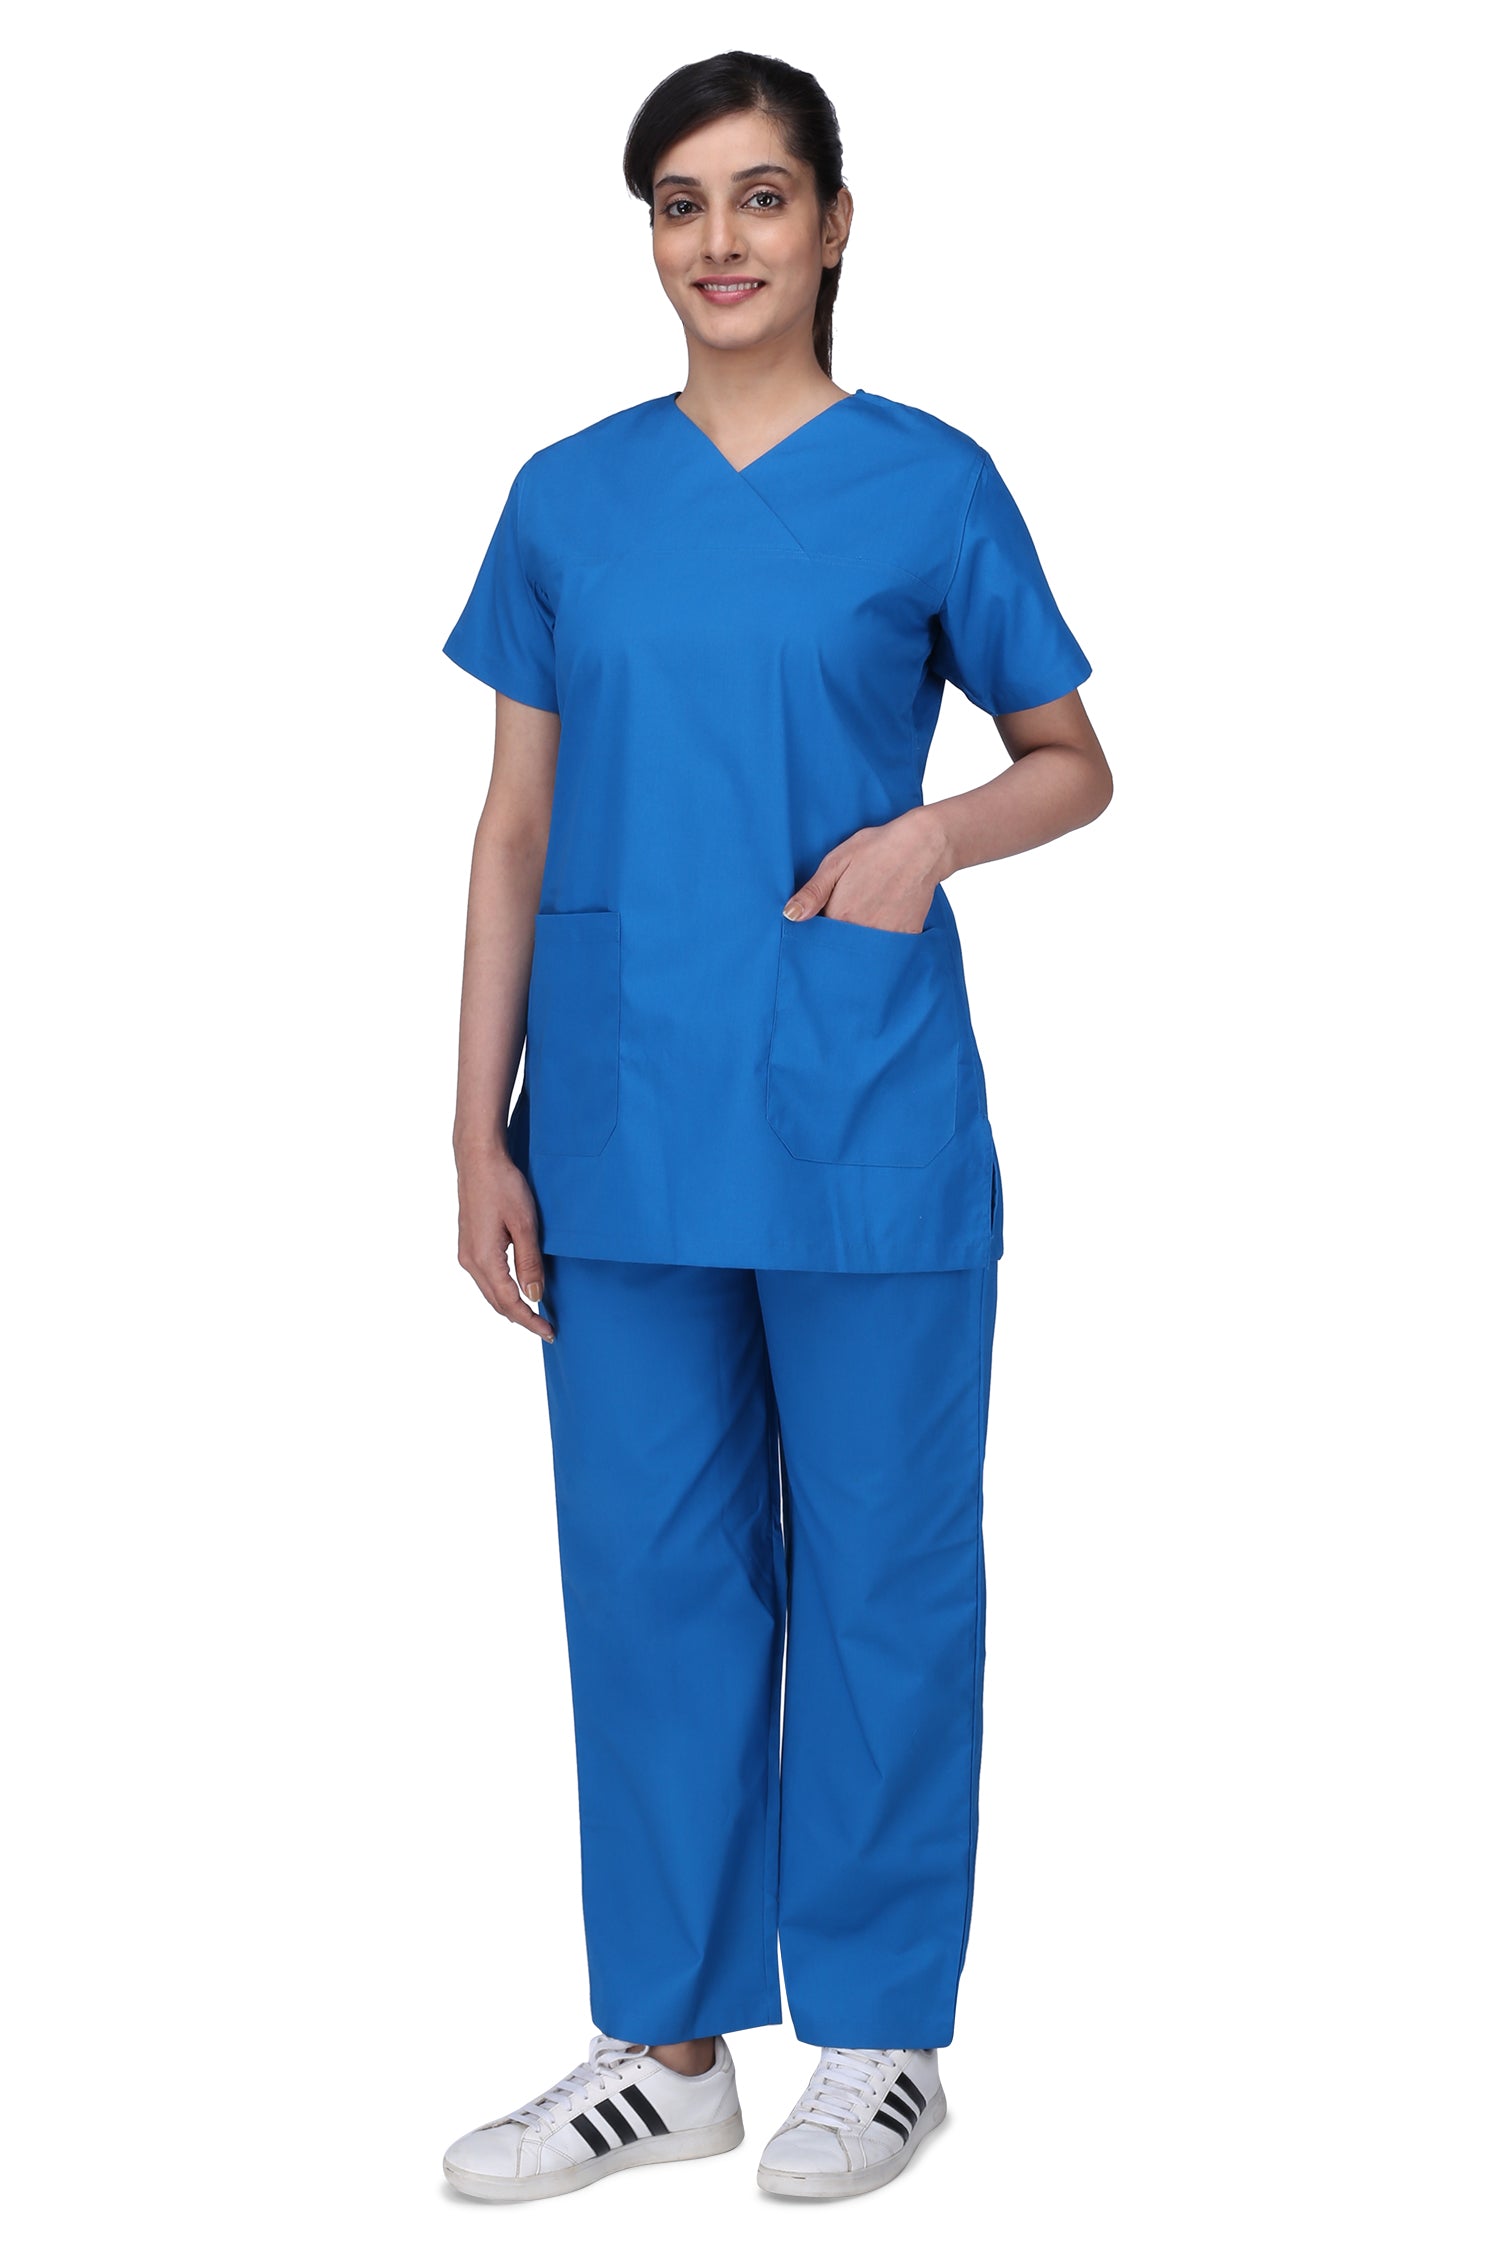 Hospital Scrubs Female - Uniform Sarees Corp - India's Most